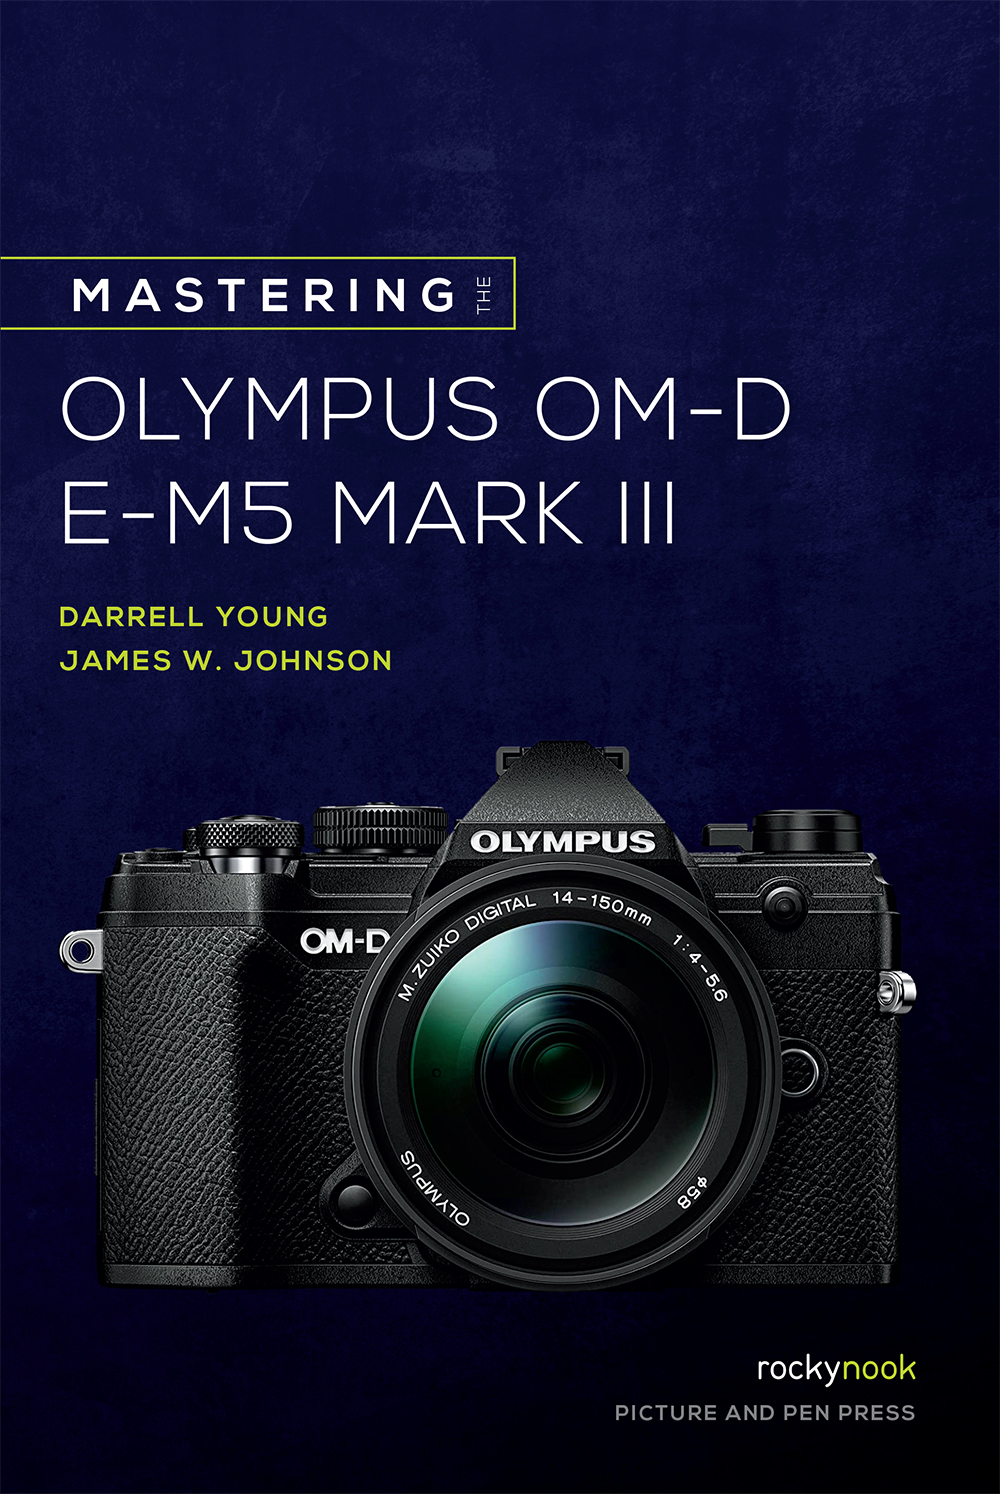 Mastering the Nikon Z6 II / Z7 II (The Mastering Camera Guide Series)